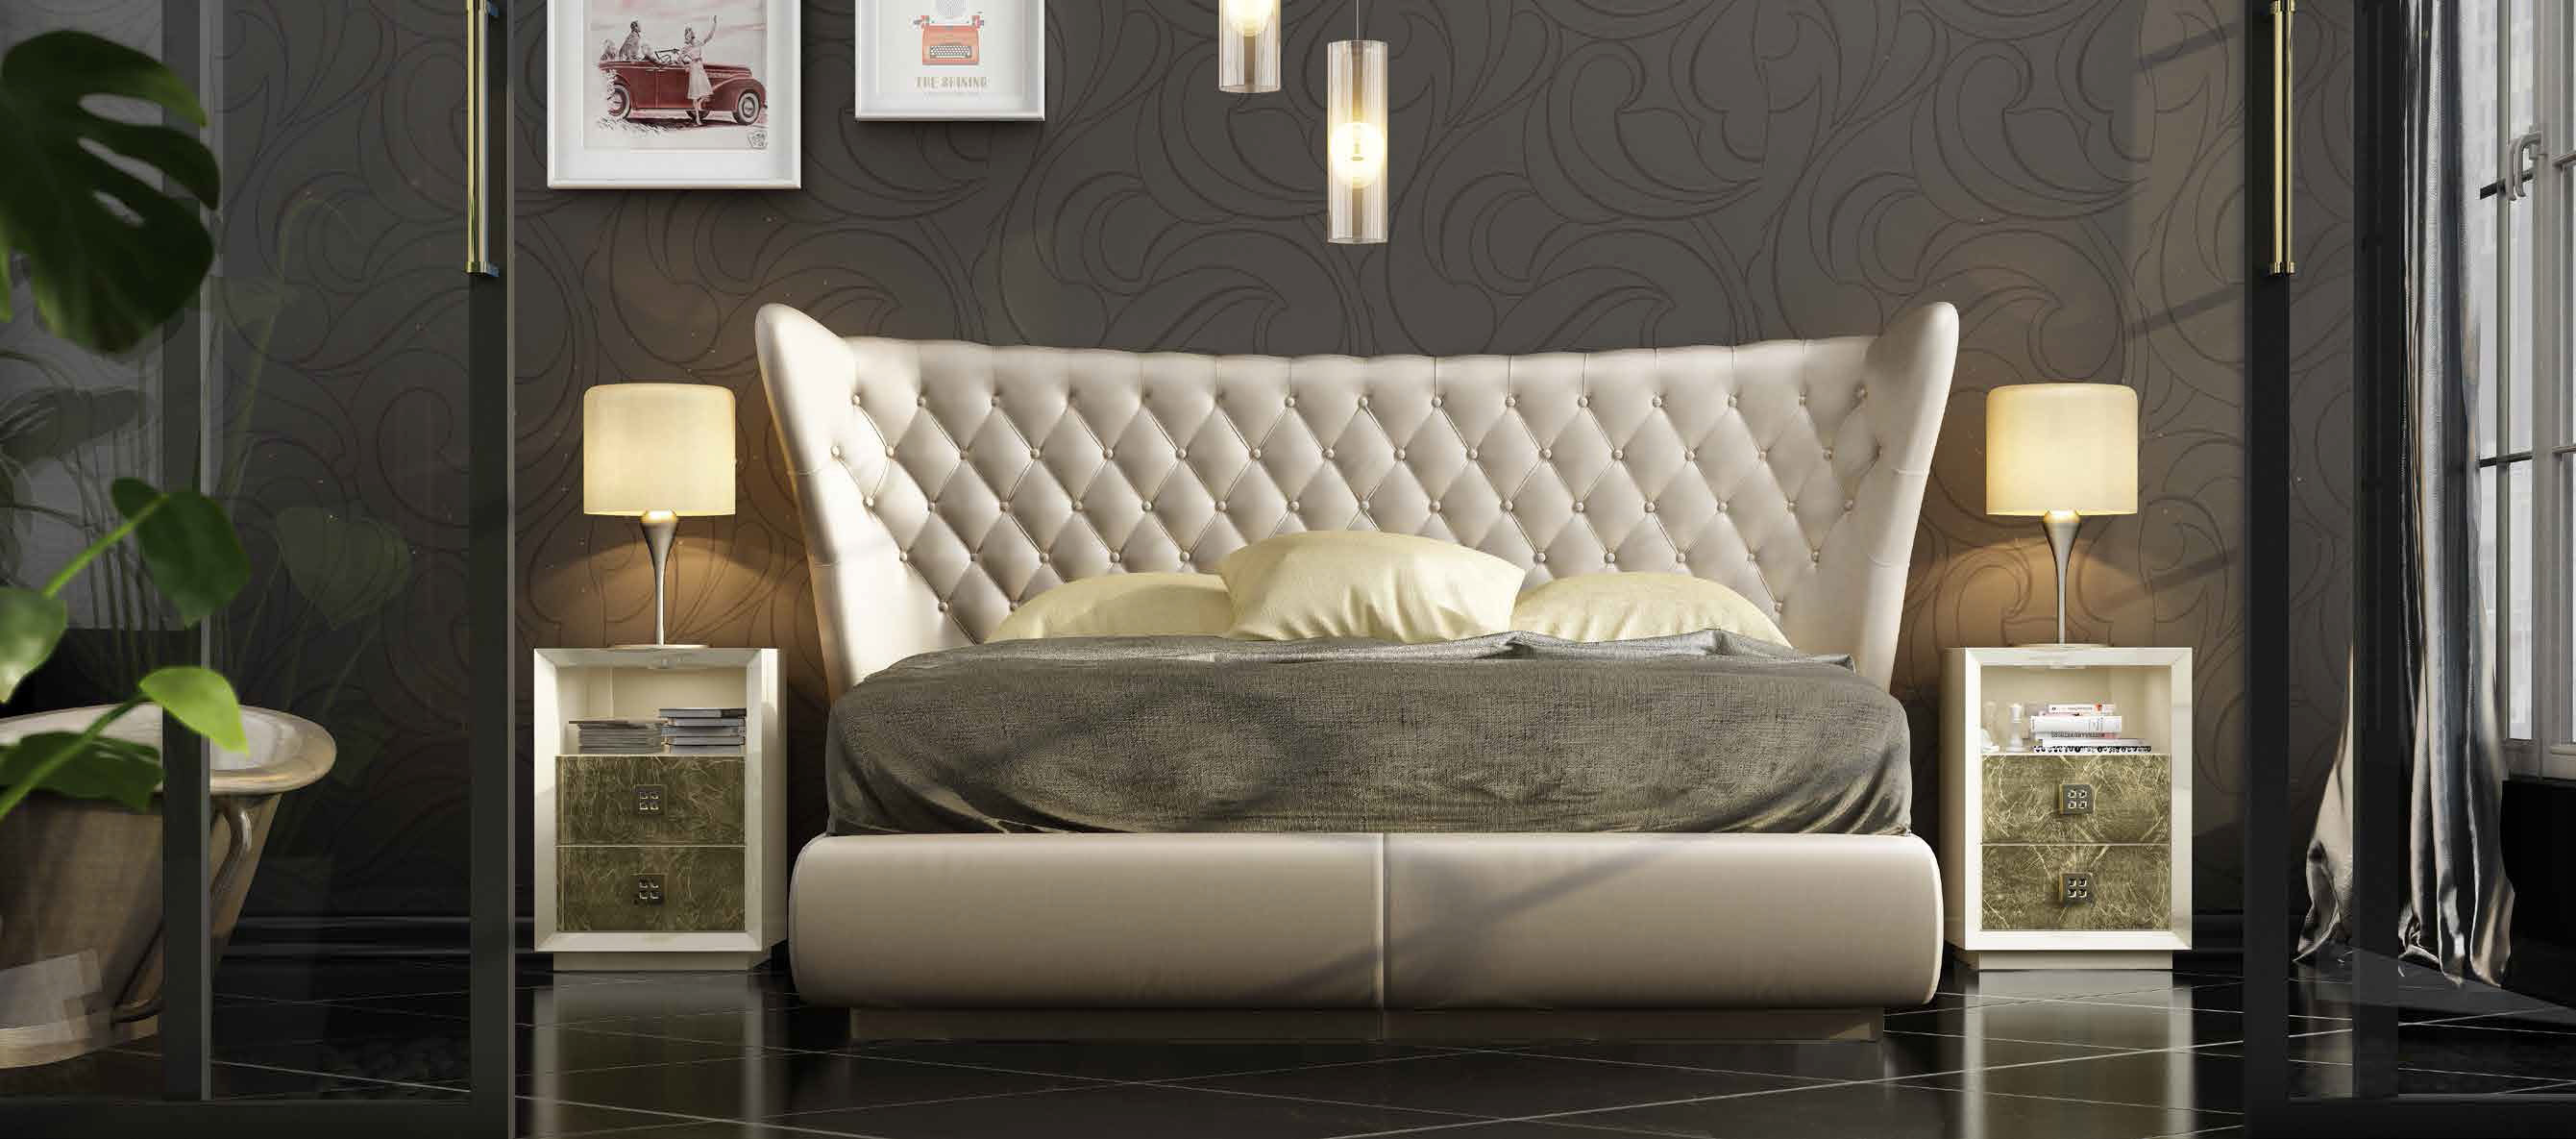 Brands Franco Furniture Bedrooms vol2, Spain DOR 48